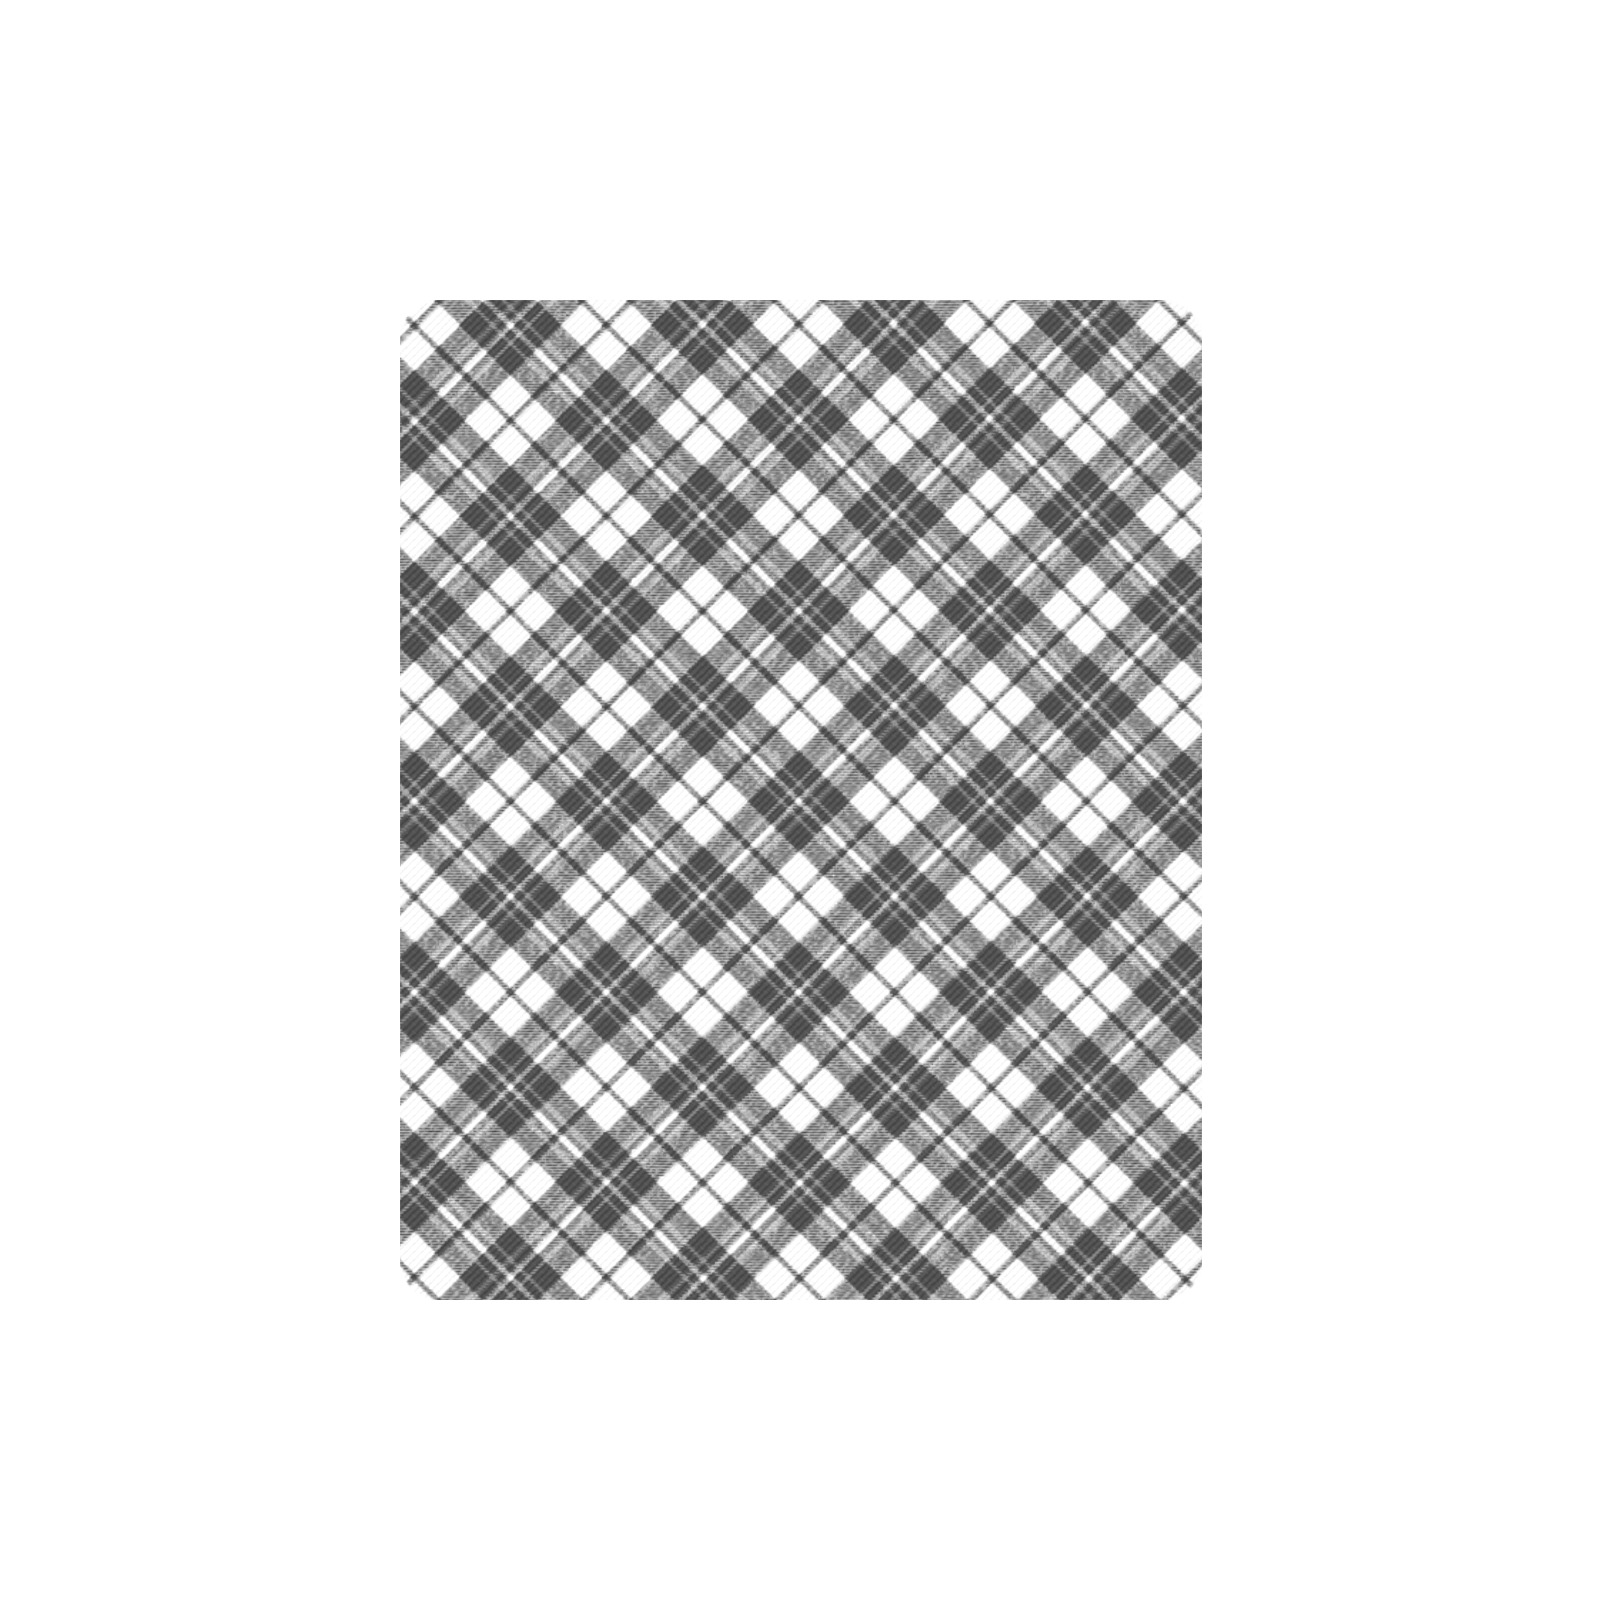 Tartan black white pattern holidays Christmas xmas elegant lines geometric cool fun classic elegance Rectangle Mousepad